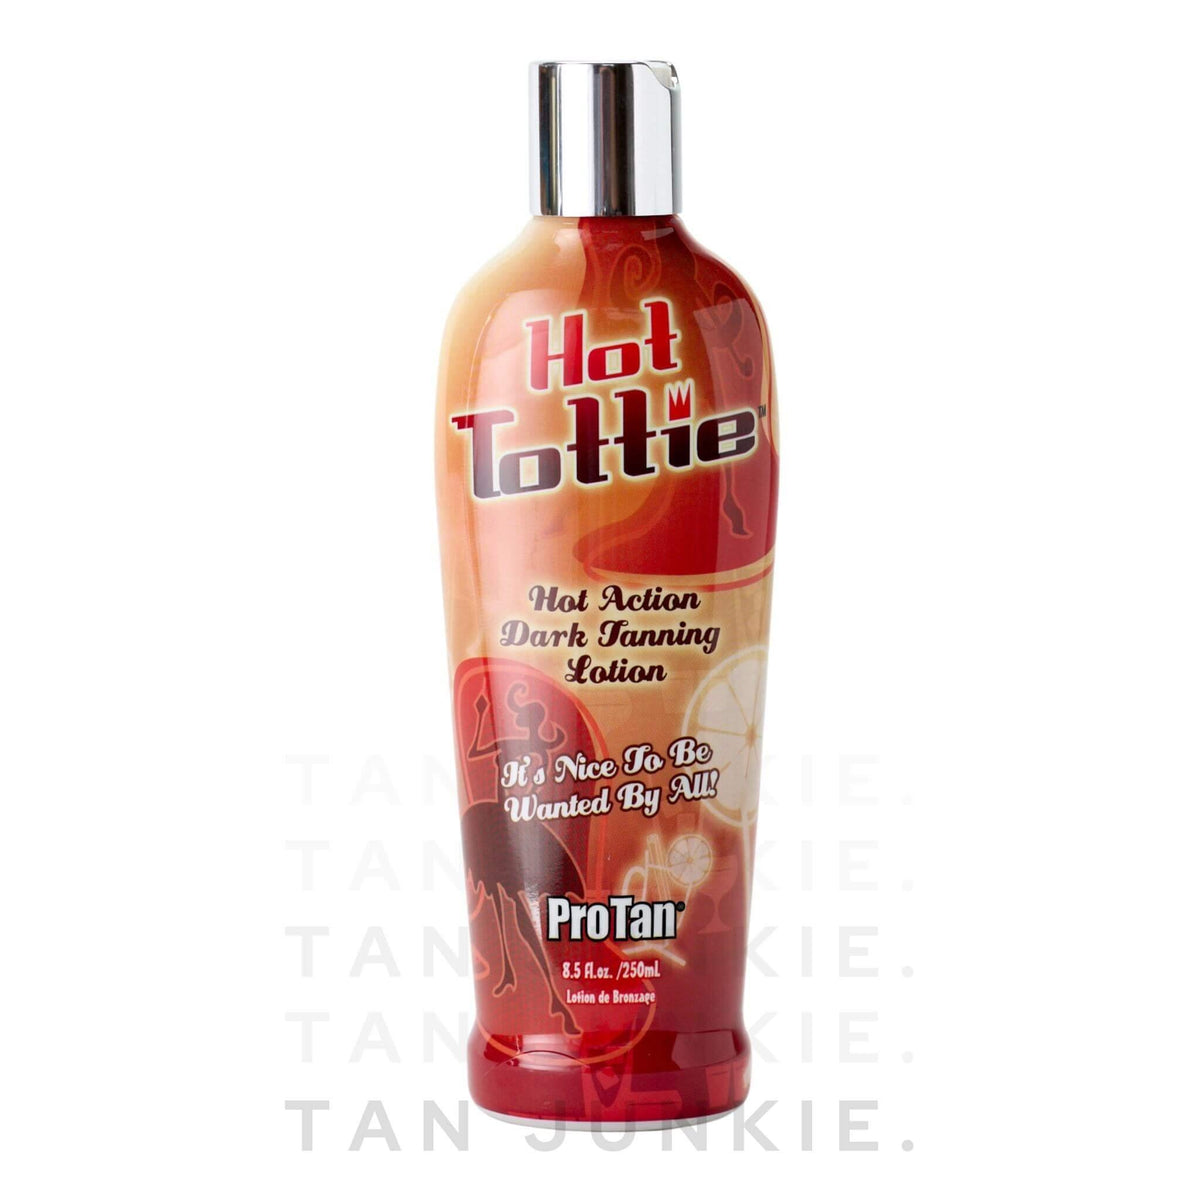 Hot Tottie Hot Action Dark Tanning Accelerator - Tan Junkie